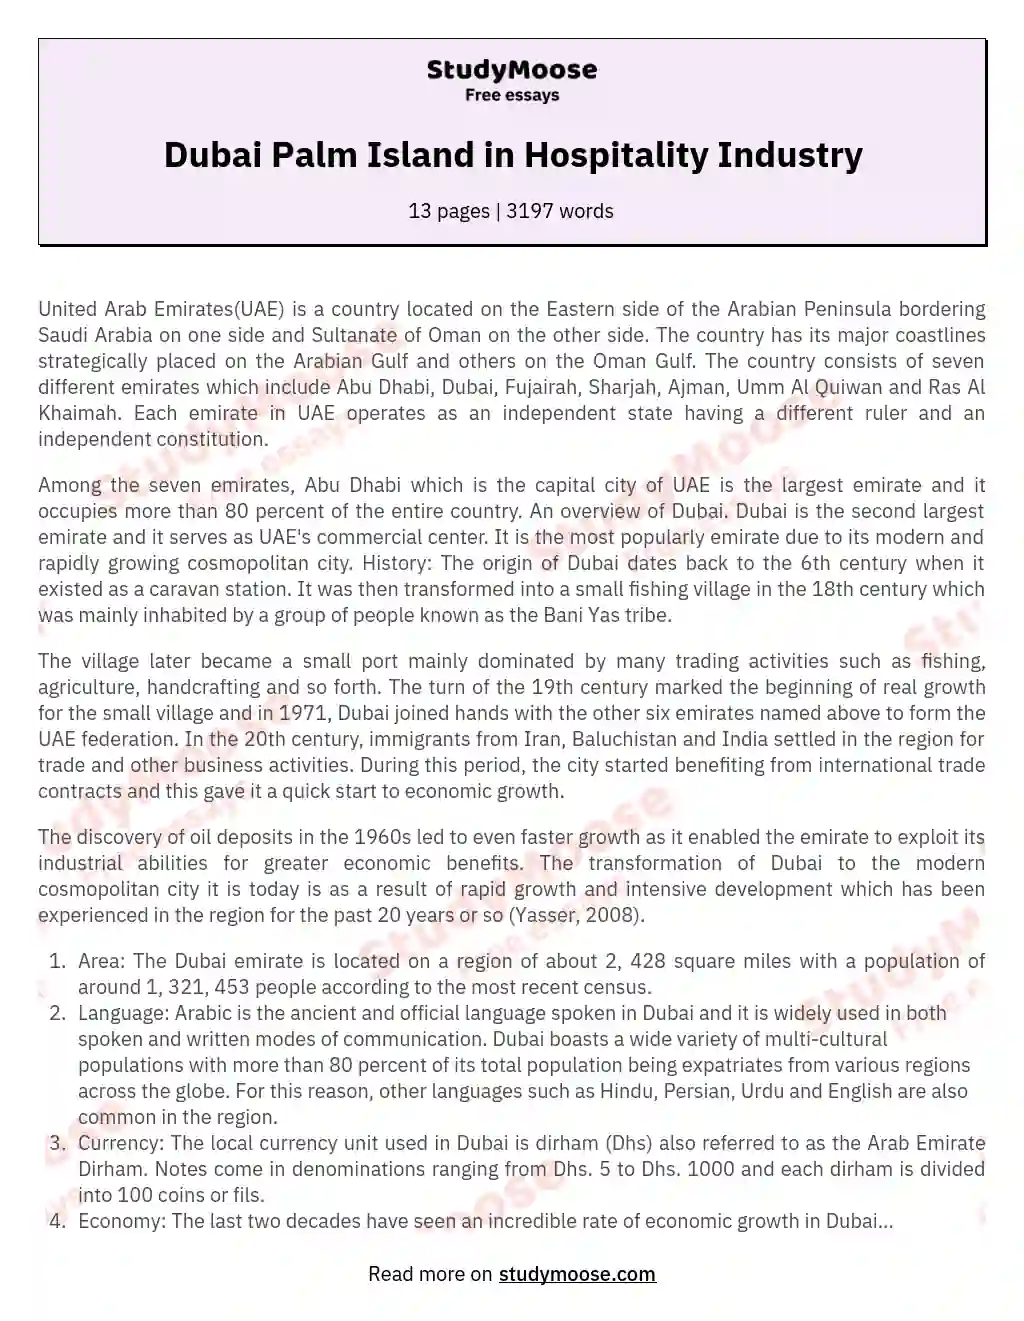 Dubai Palm Island in Hospitality Industry essay